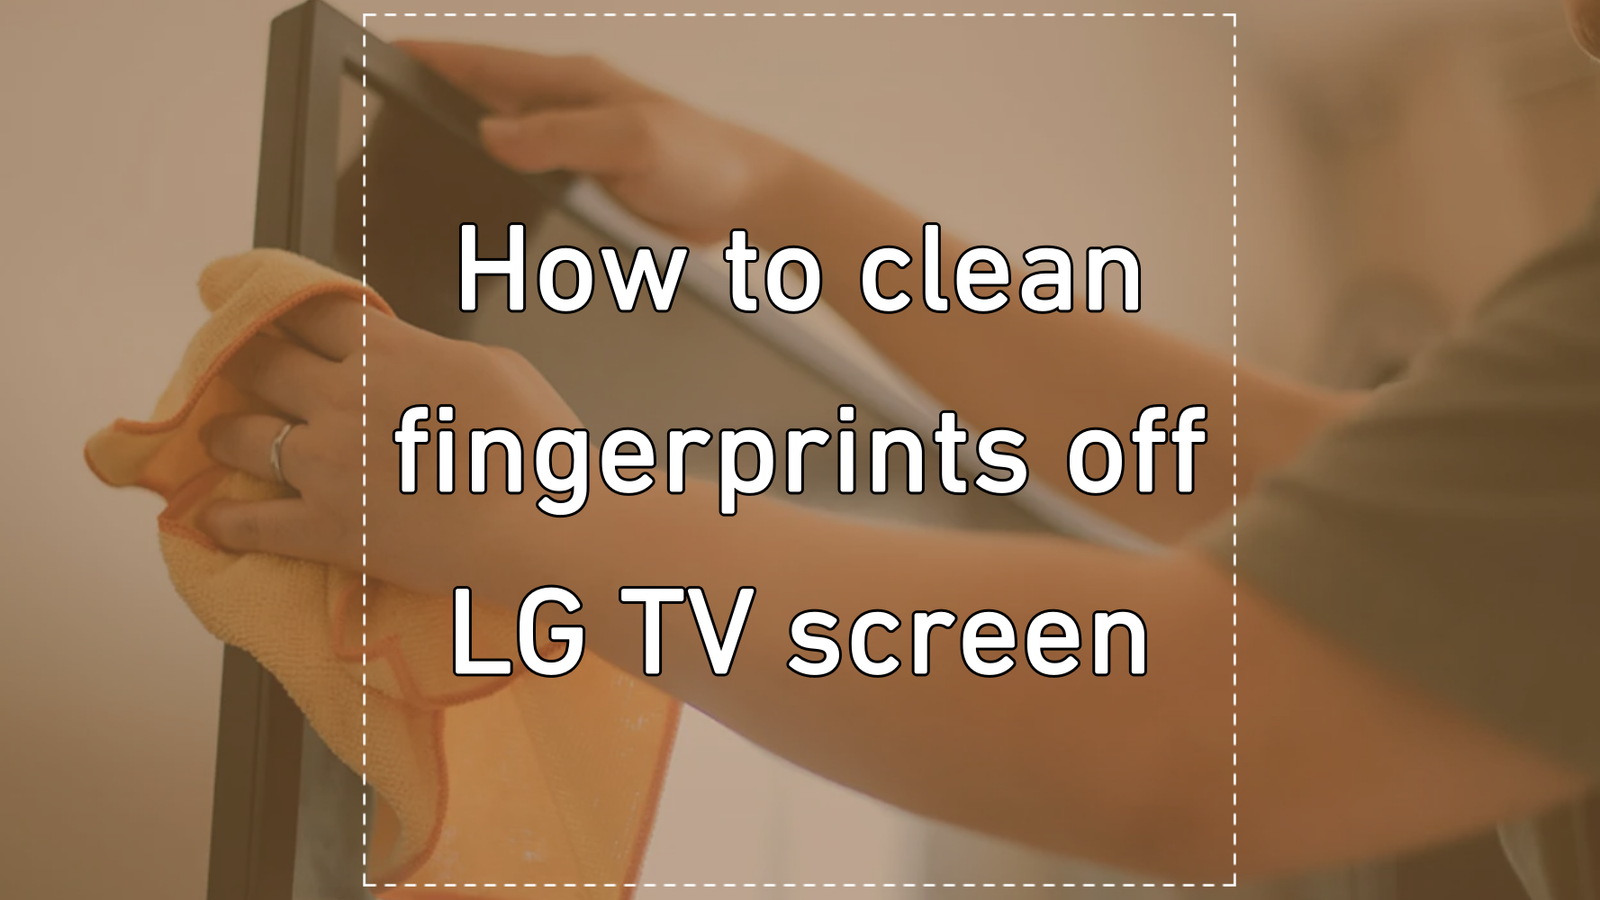 How to clean fingerprints off LG TV screen